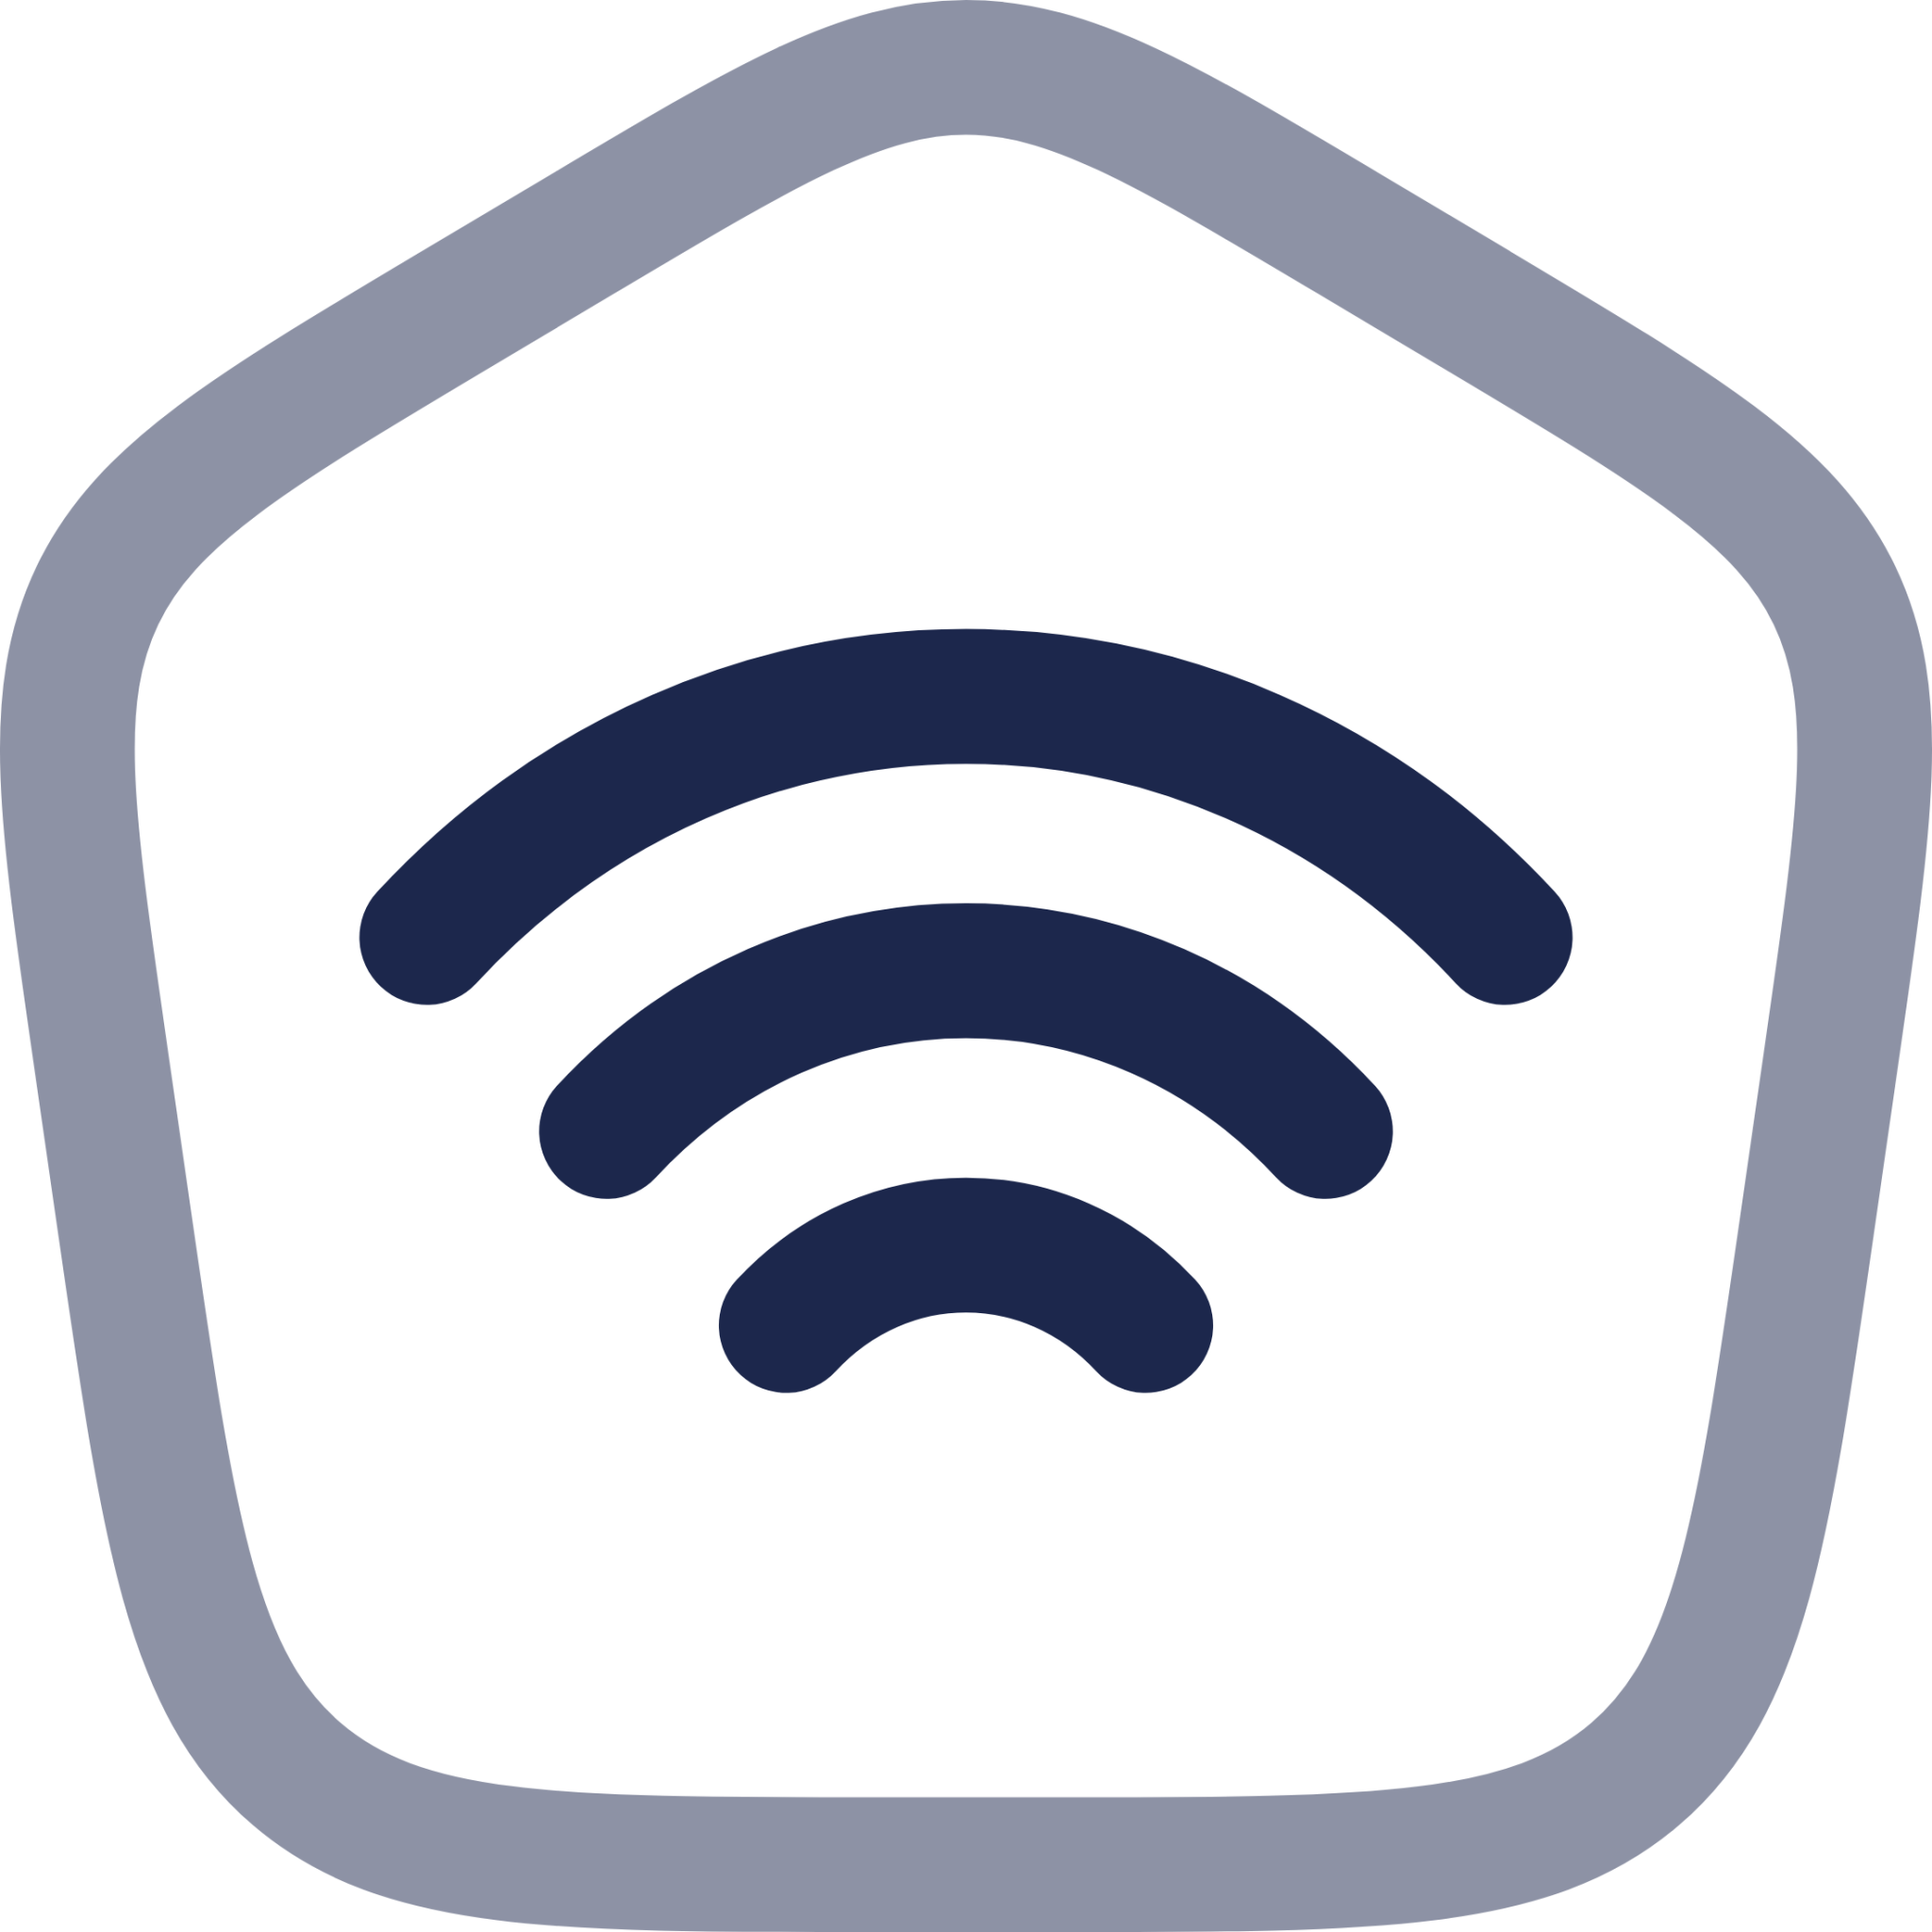 Home WiFi Angle icon